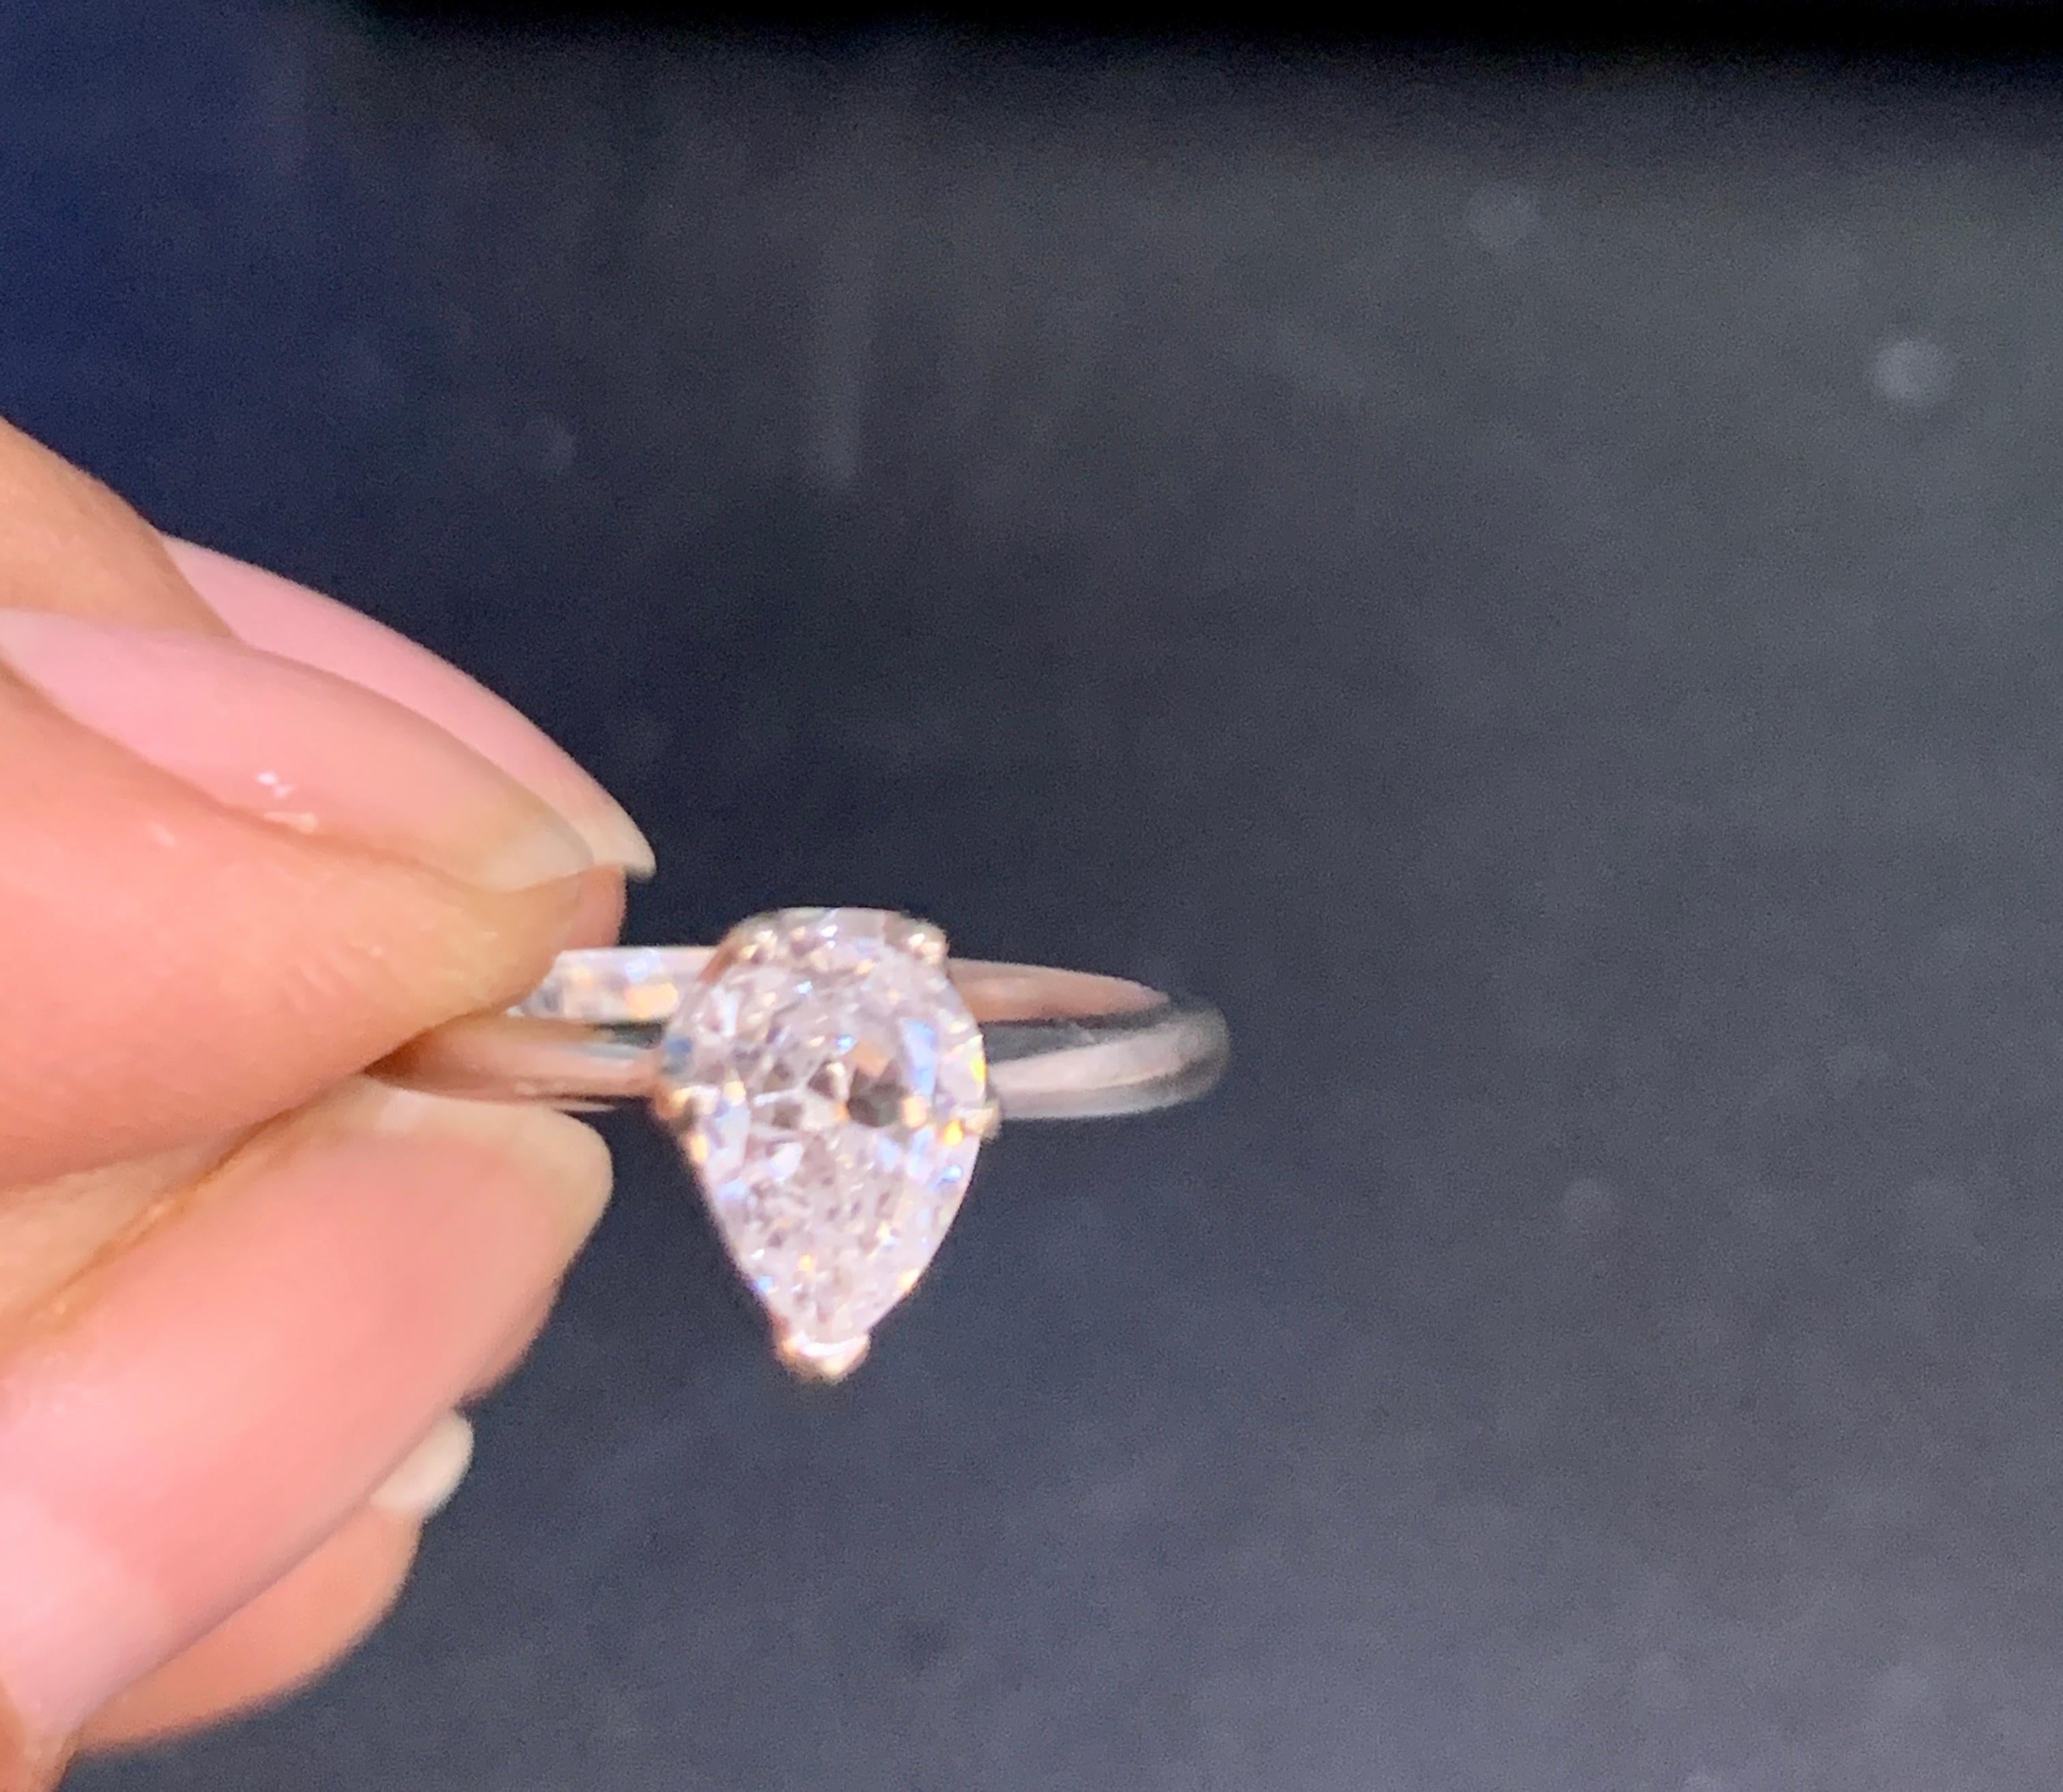 1.2 carat pear shaped diamond ring